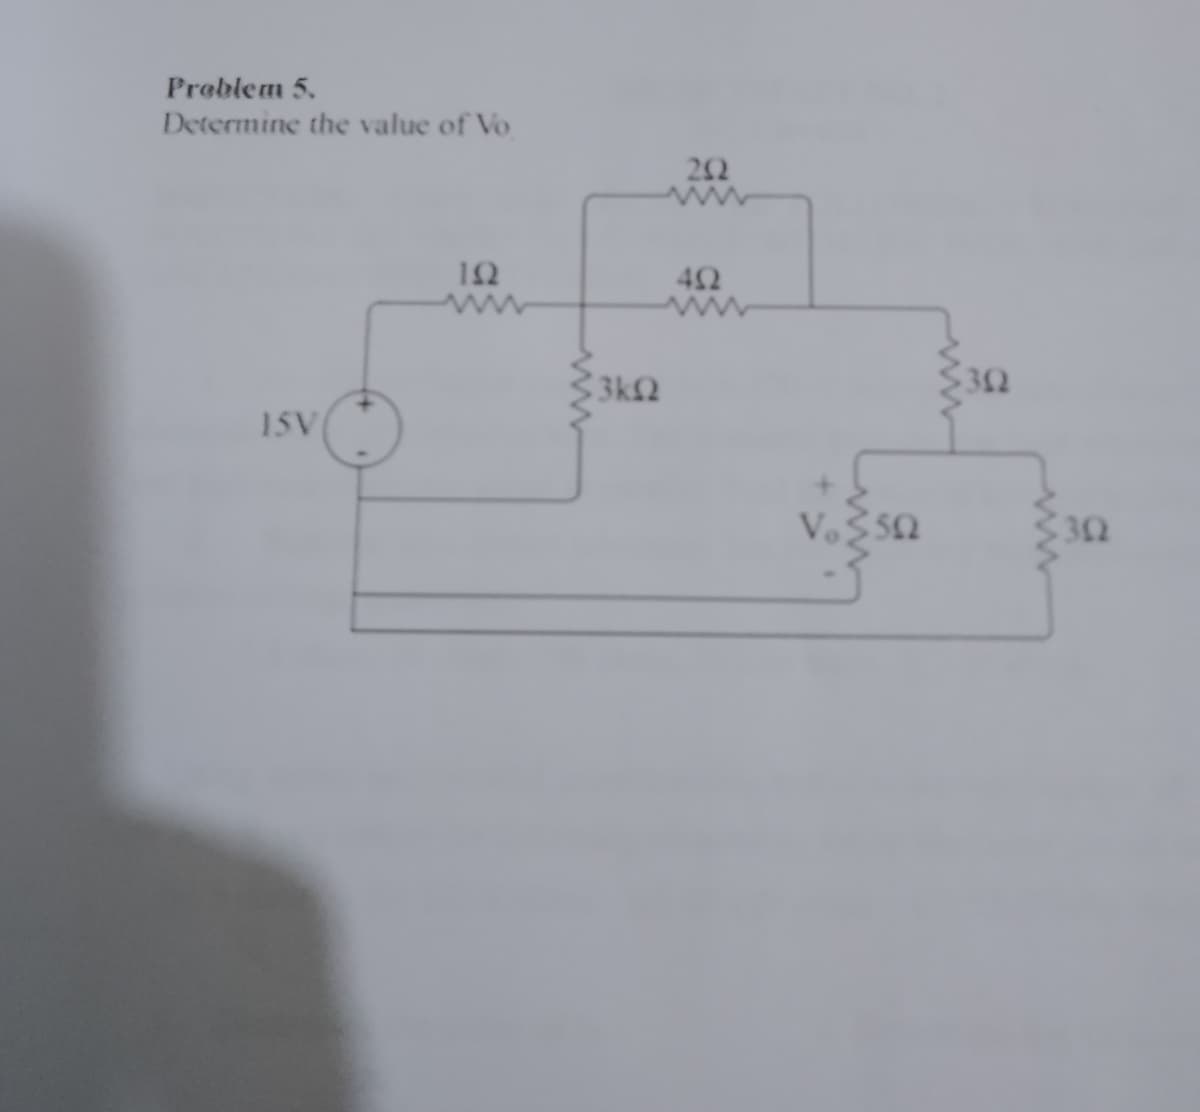 Problem 5,
Determine the value of Vo
ΙΩ
EV
ΚΩ
ΖΩ
ΤΩ
V 35Ω
Ω
ΤΩ